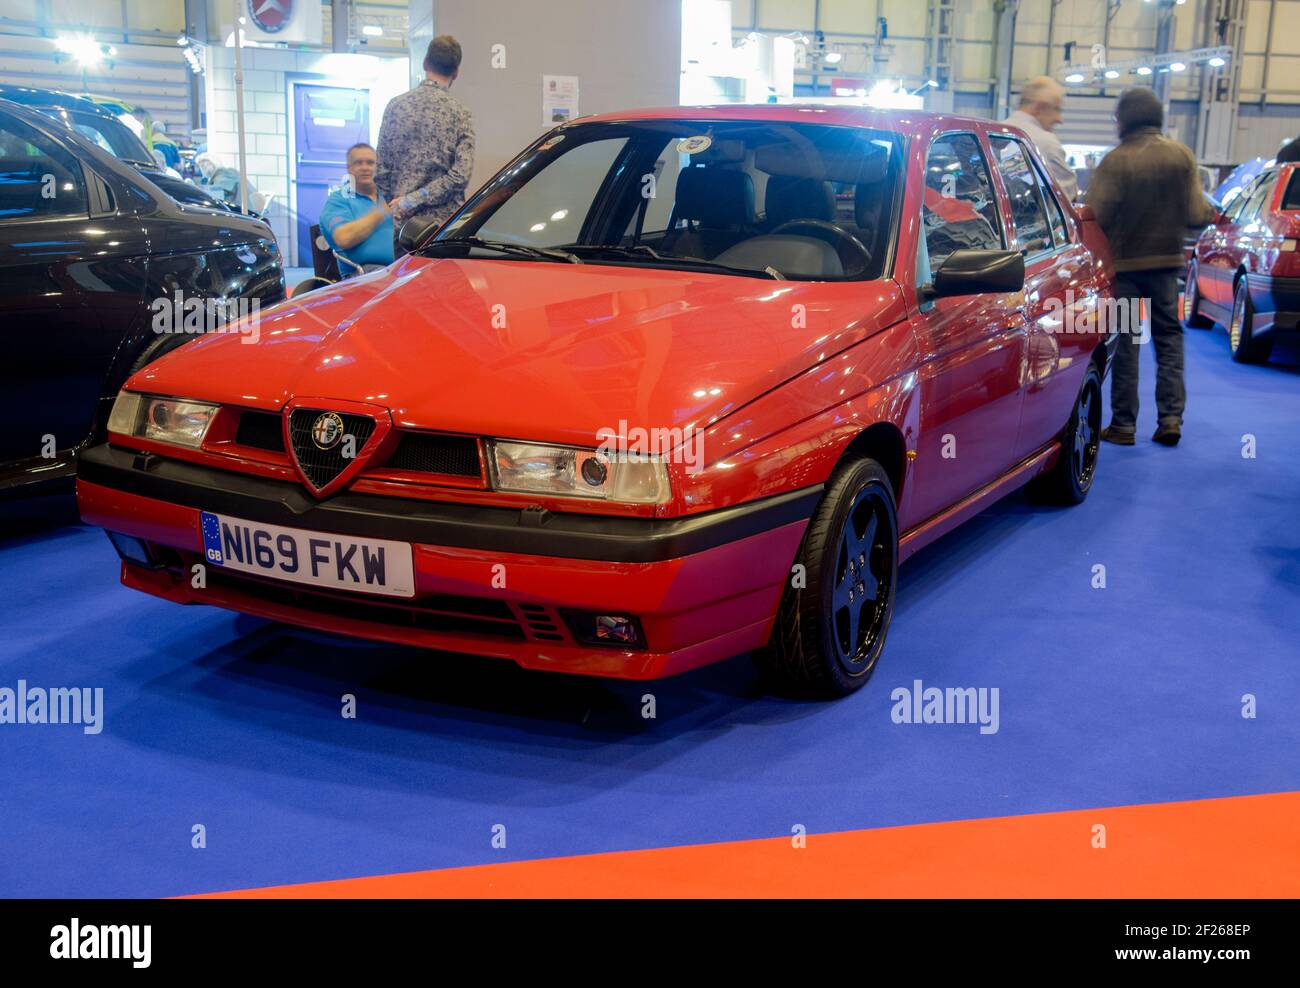 Alfa Romeo 155 - Cars on show at the NEC Classic Car Show, UK Stock Photo